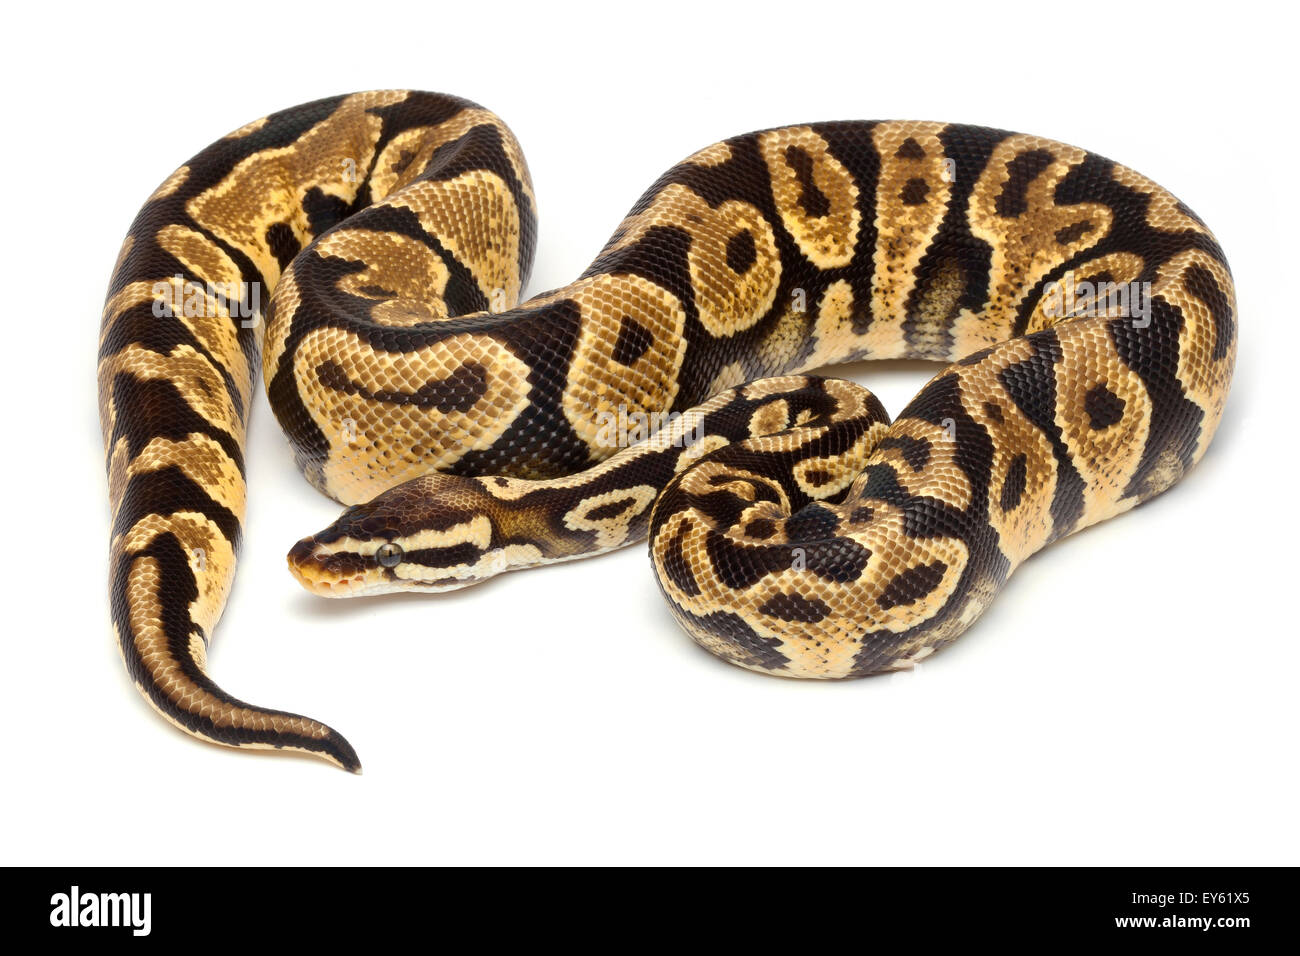 King Python 'pastel yellow belly' on white background Stock Photo